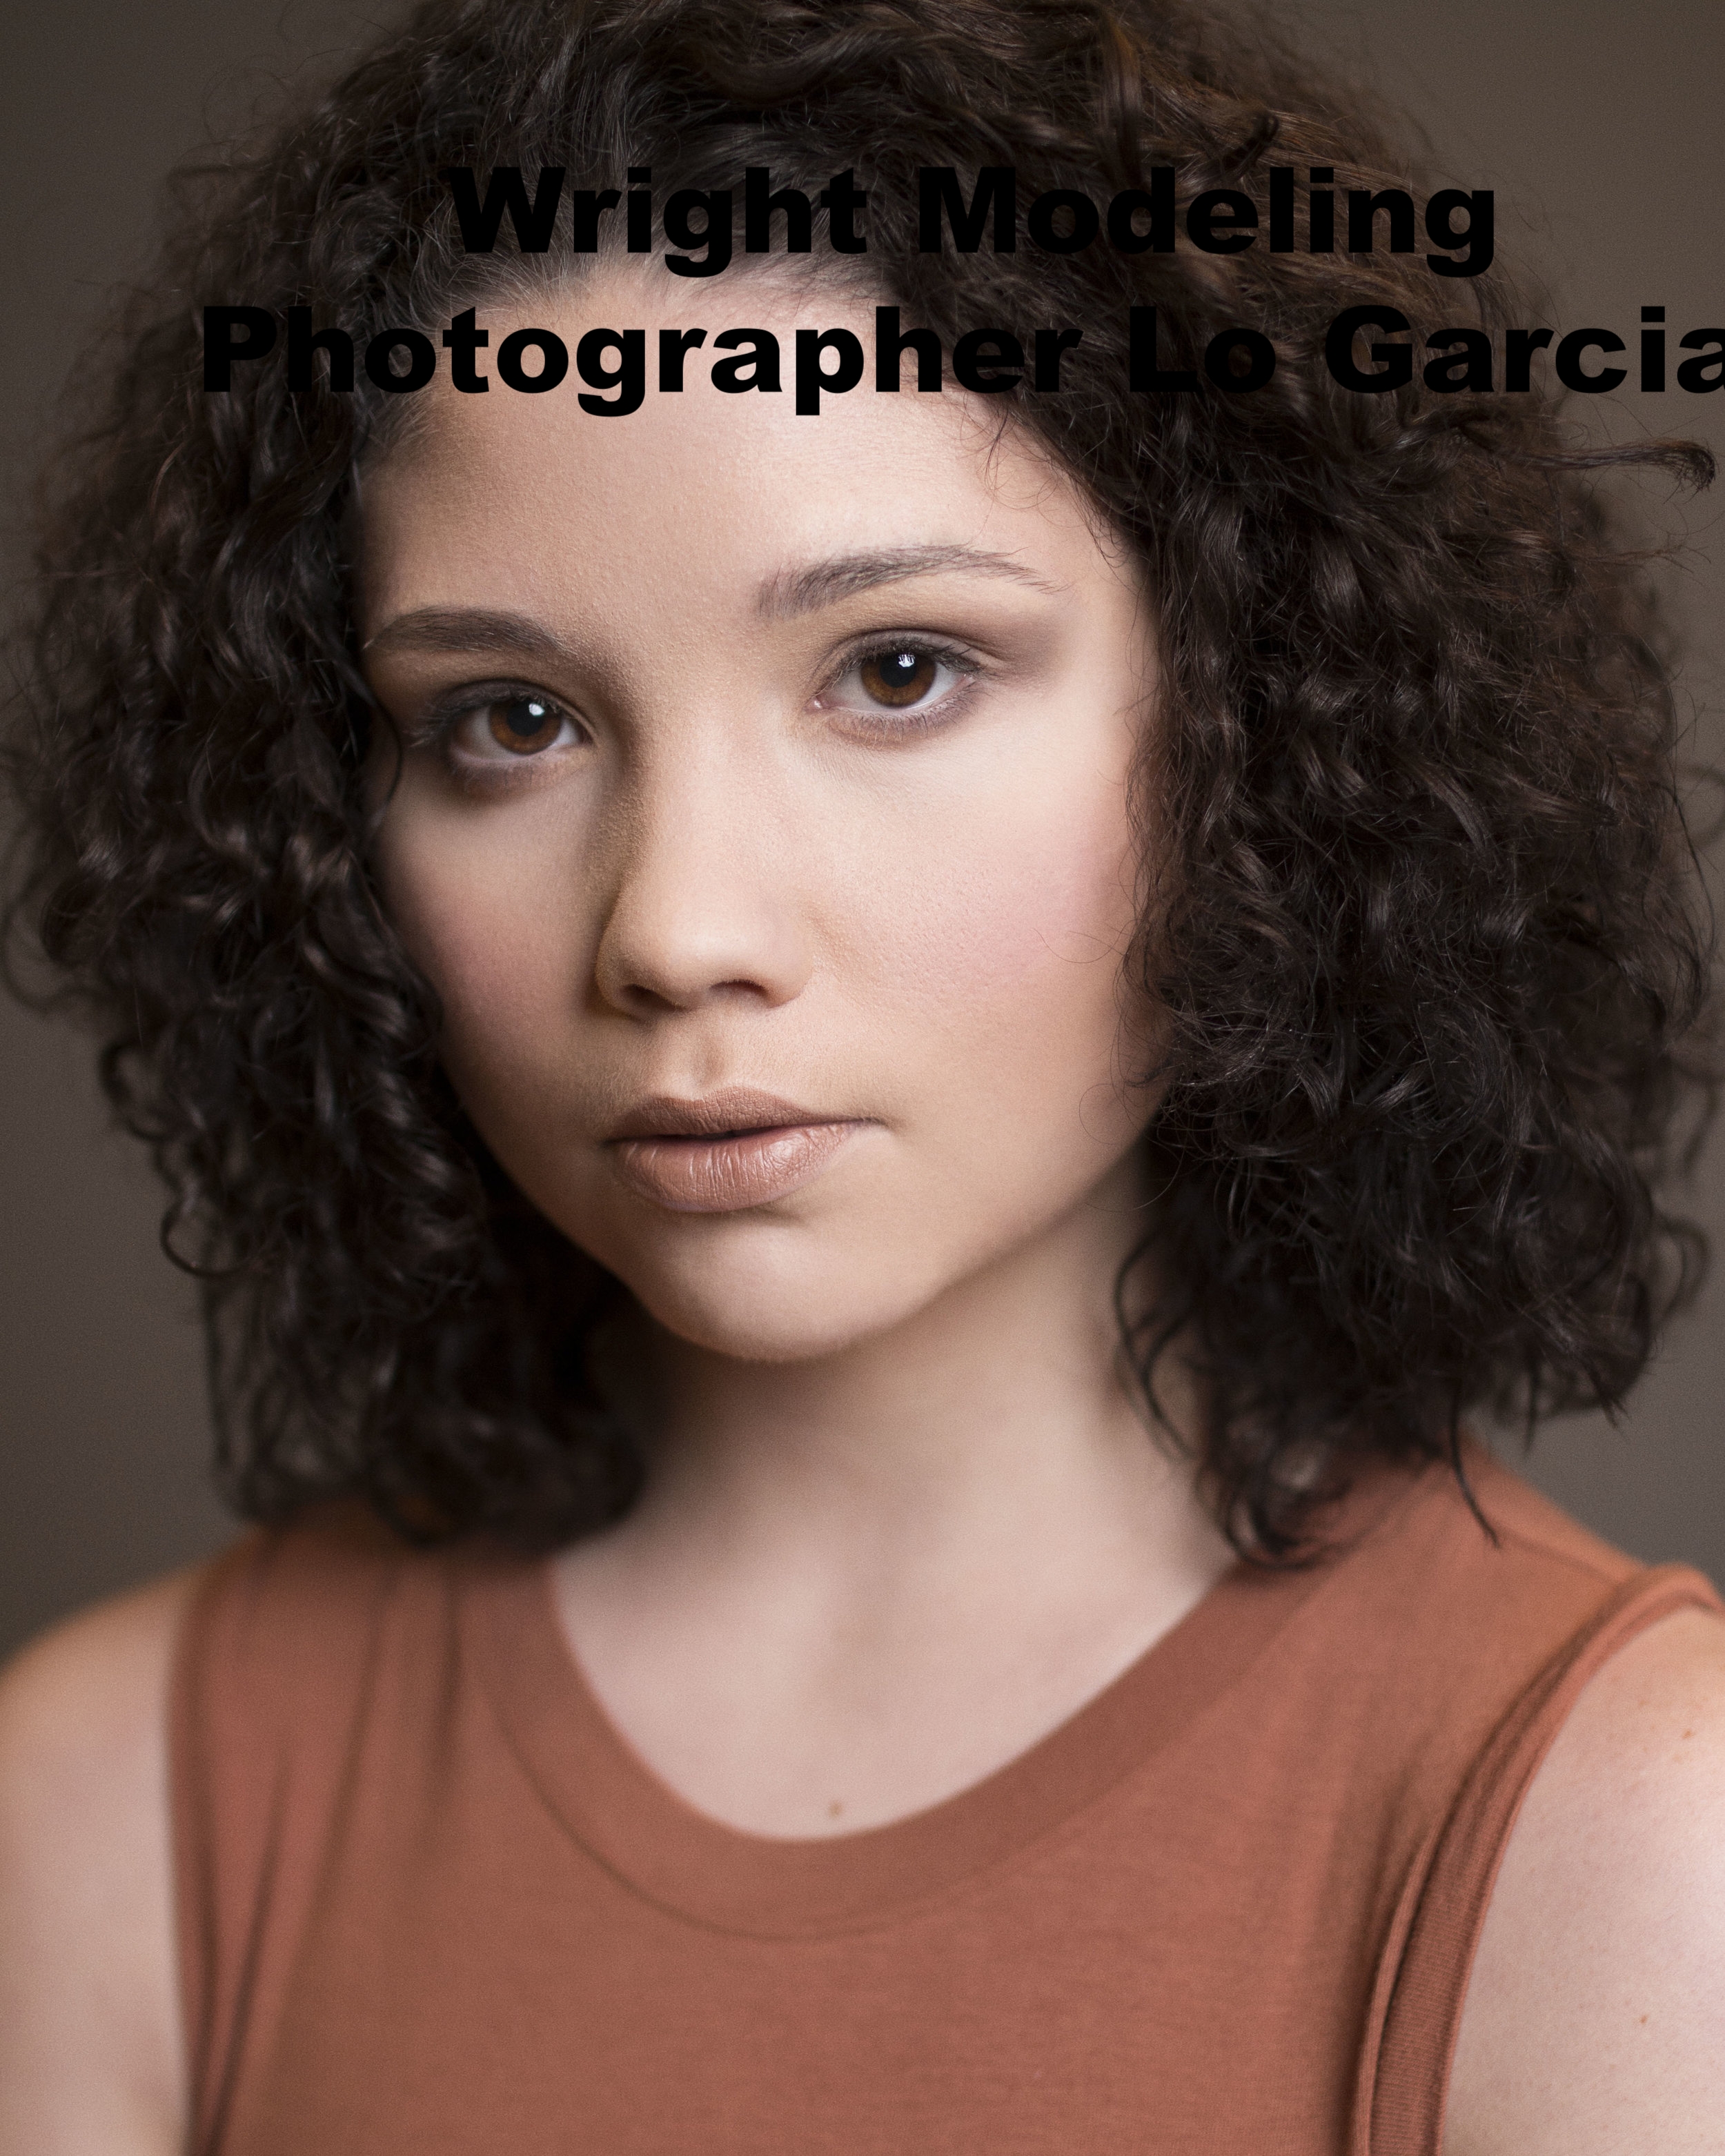  Photographer:&nbsp;Lo Garcia  Model: Jazmyne  Wright Modeling Agency 